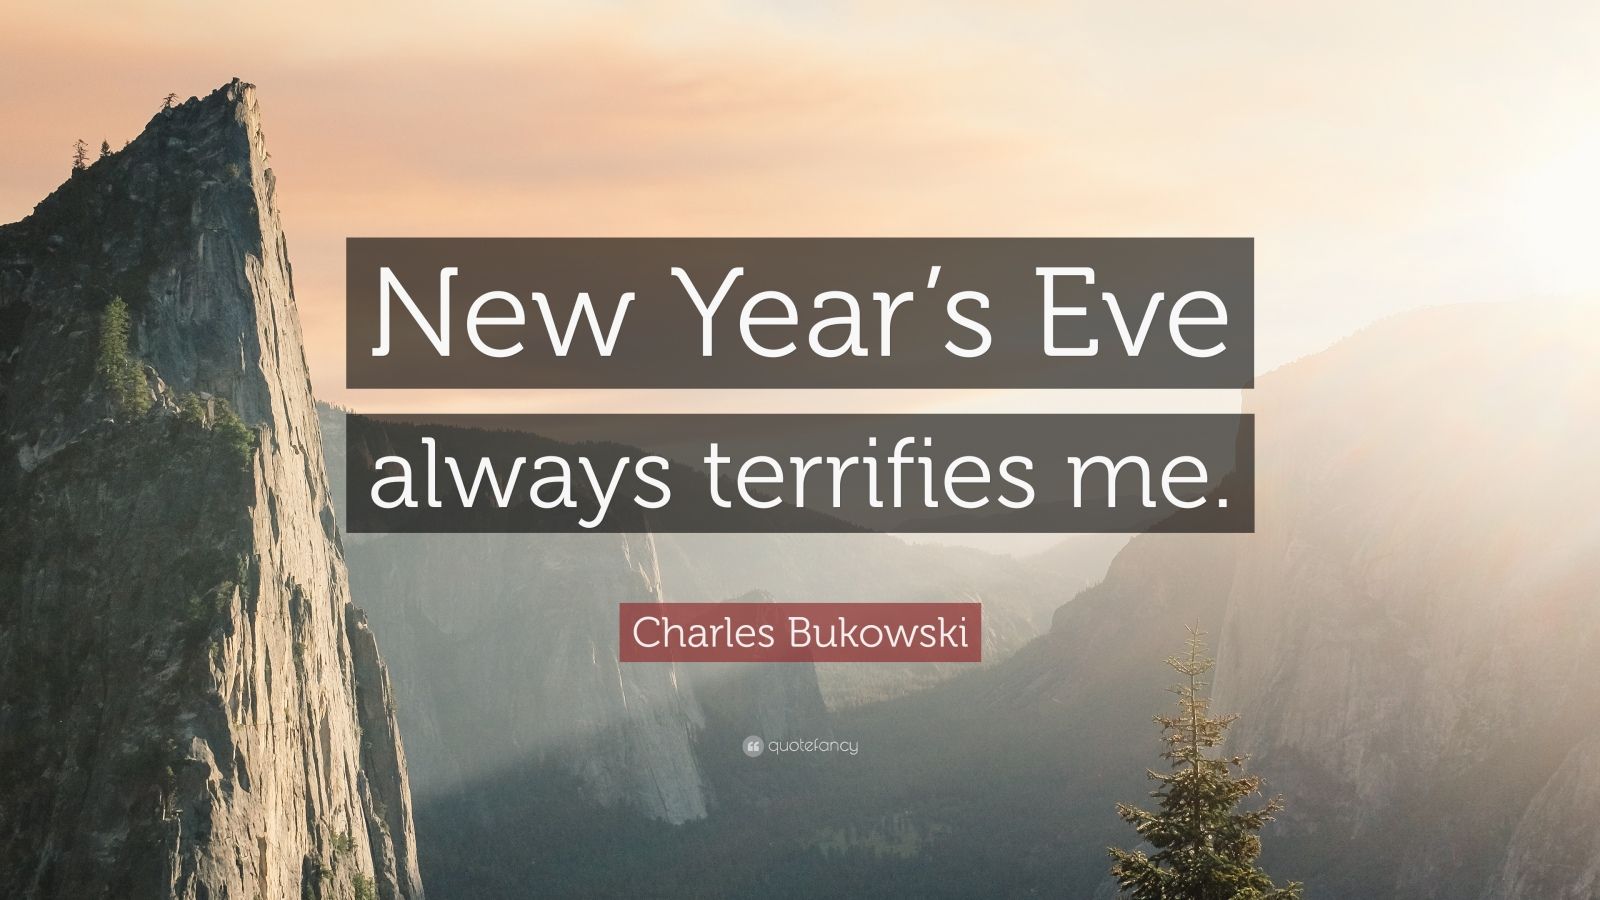 Charles Bukowski Quote: “New Year’s Eve always terrifies me.”